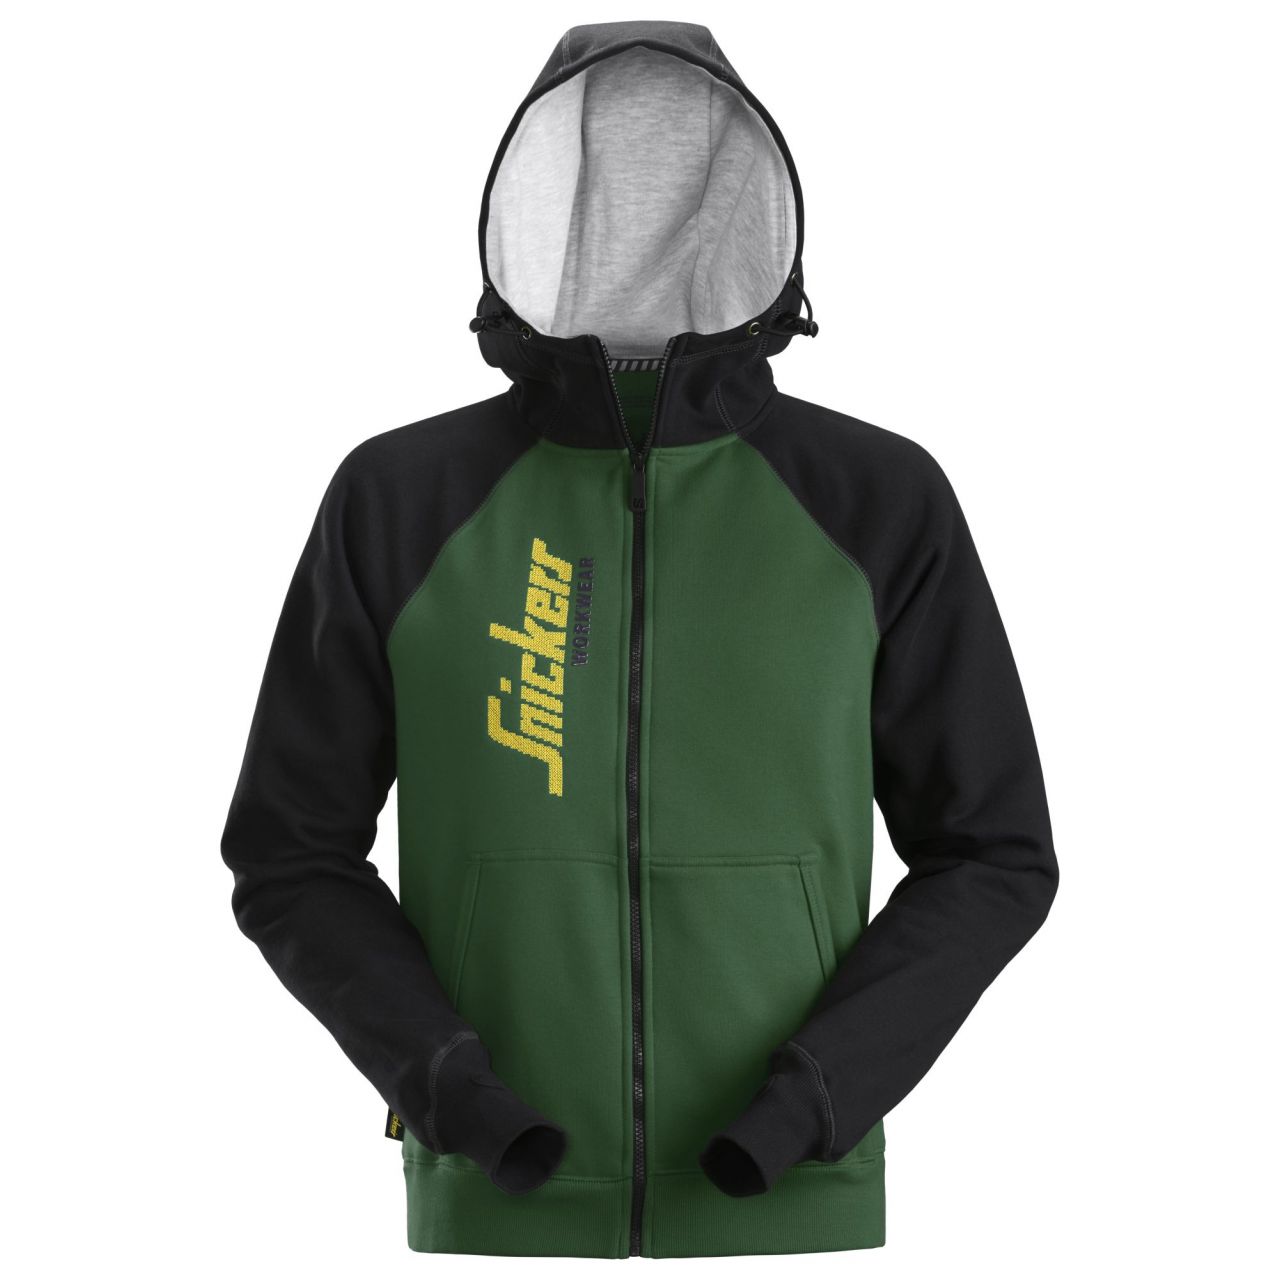 Sudadera con capucha con cremallera completa y logotipo Verde bosque/Negra talla M